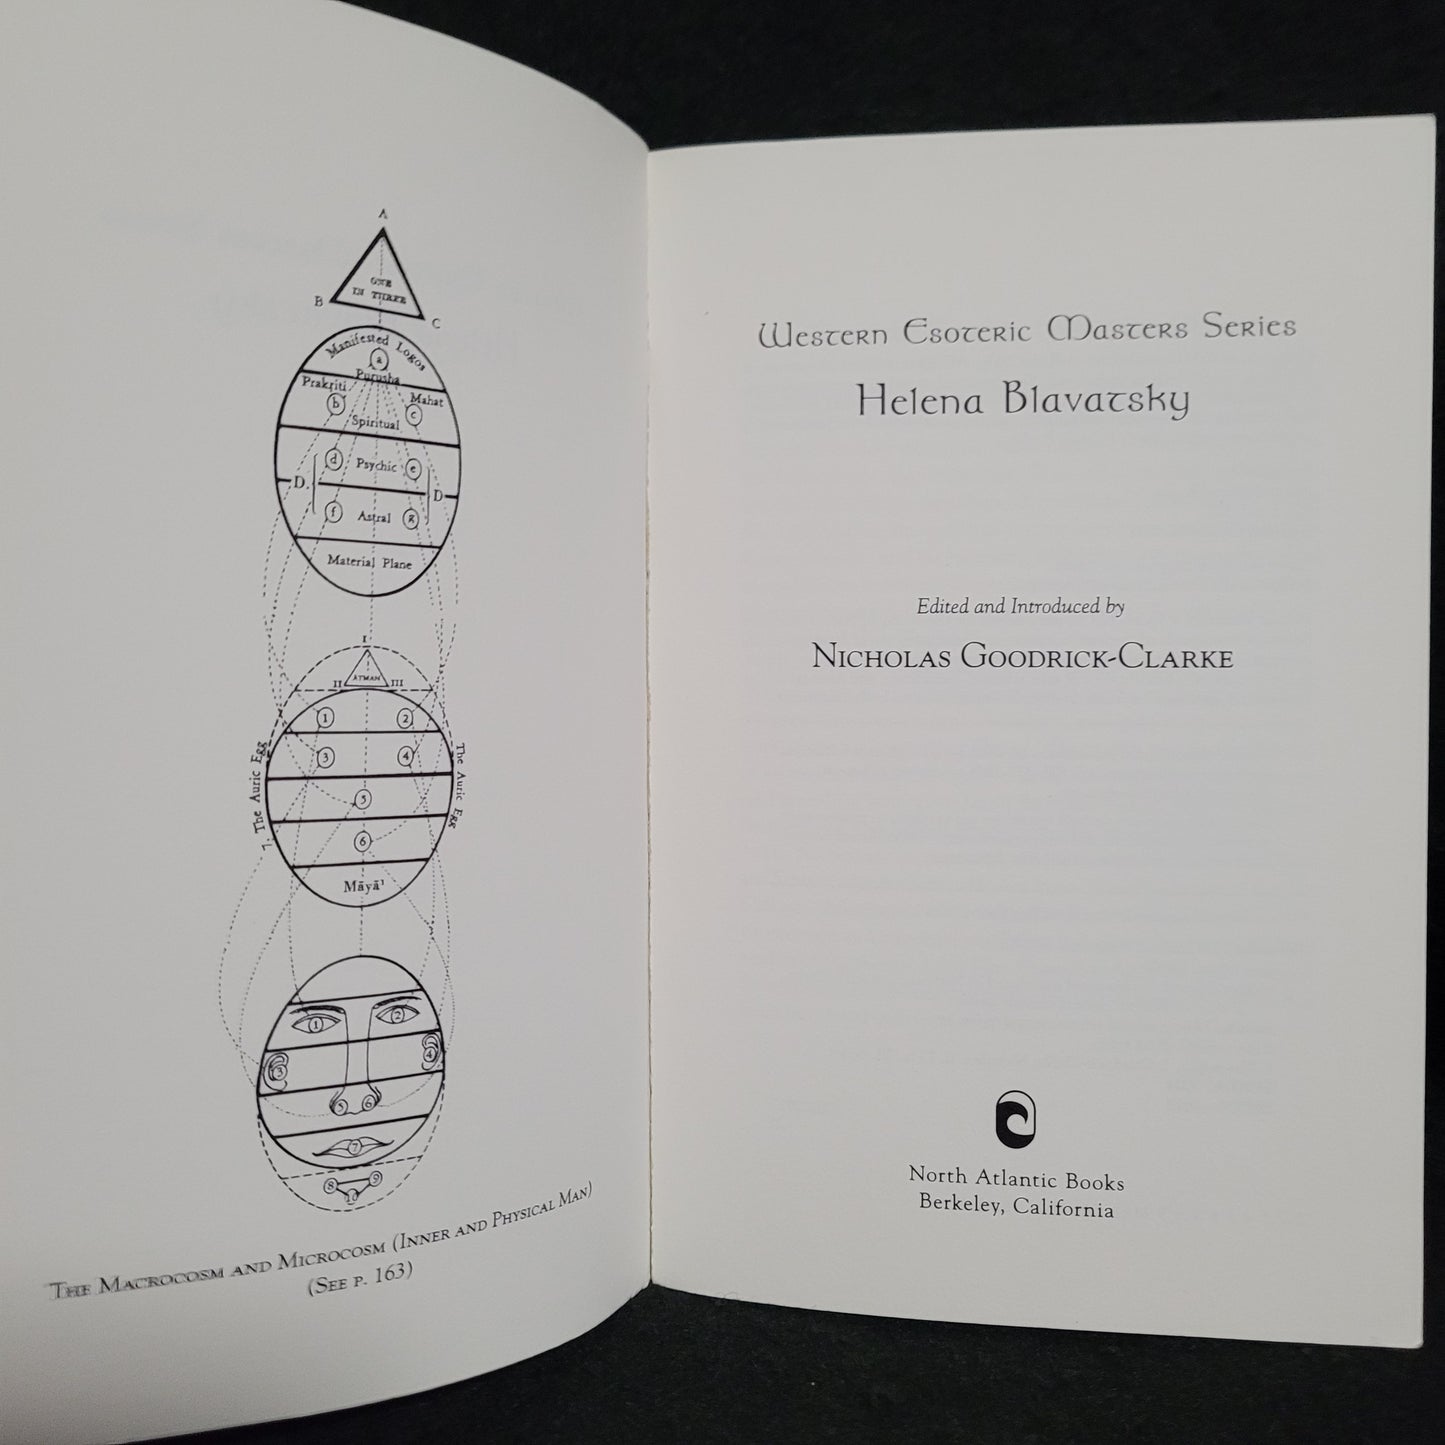 Helena Blavatsky, Western Esoteric Masters Series edited by Nicholas Goodrick-Clarke (North Atlantic Books, 2004) Paperback